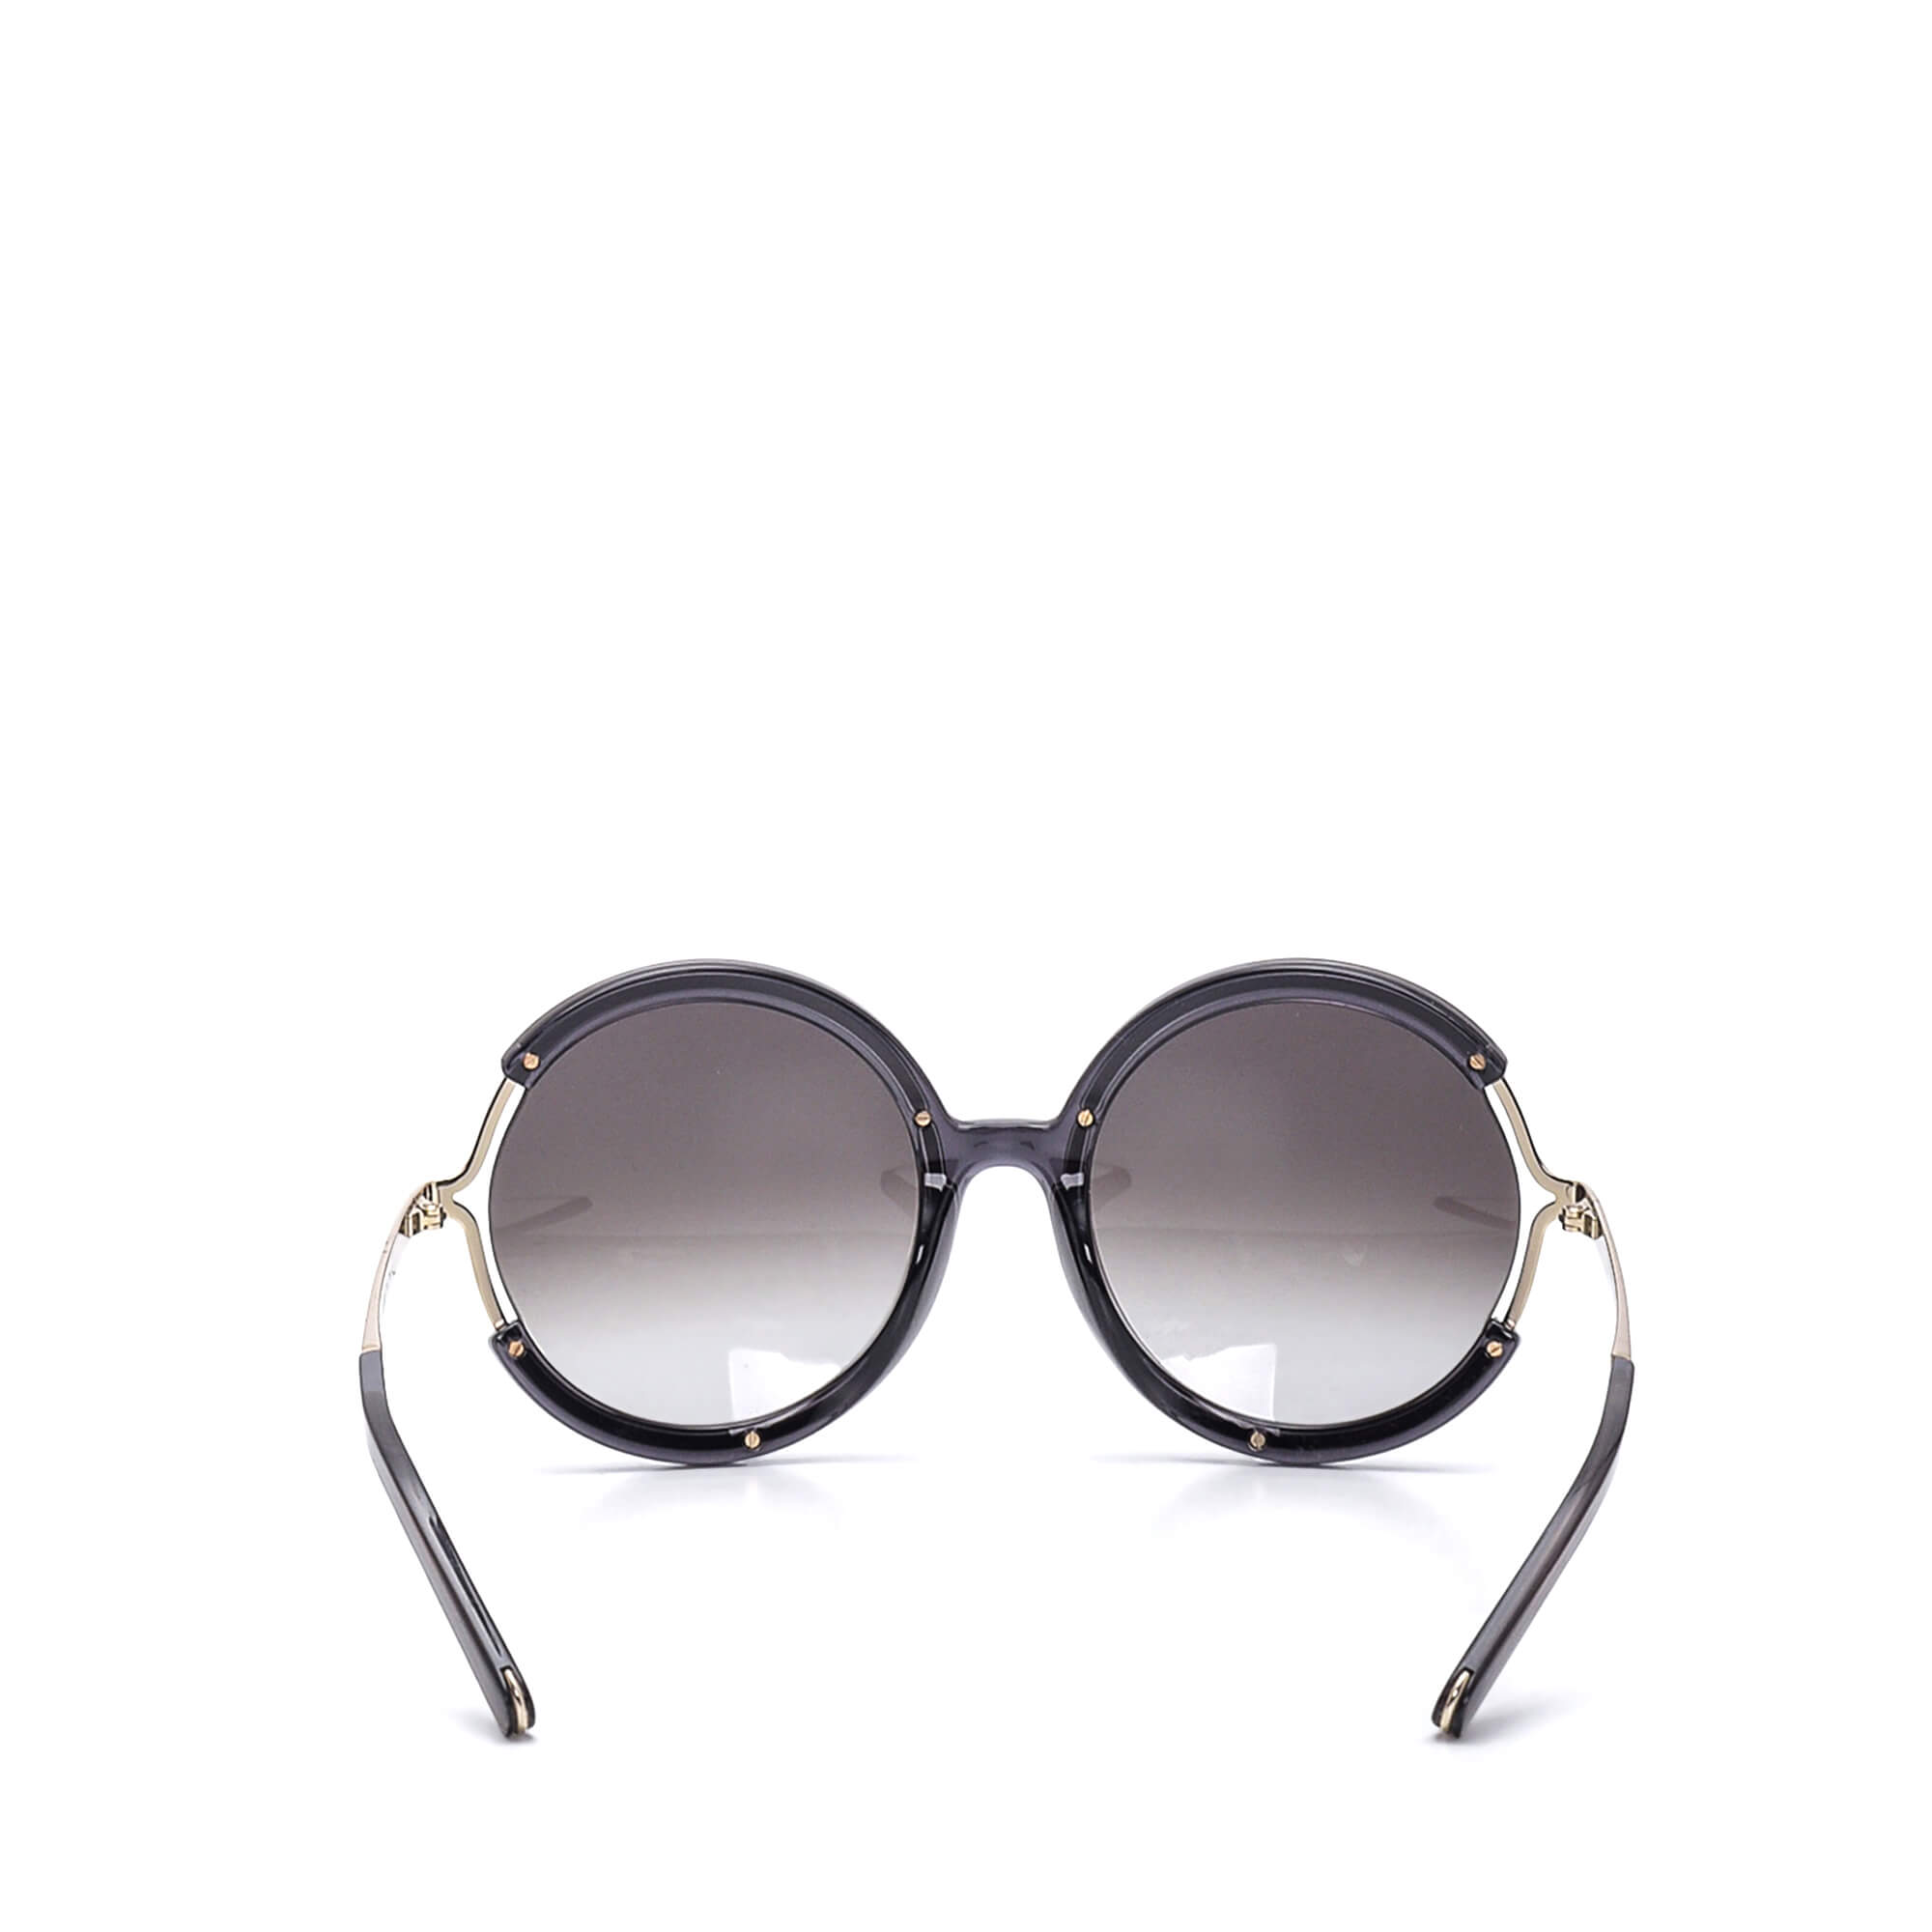 Chloe - Black & Silver Round Oversize Sunglasses